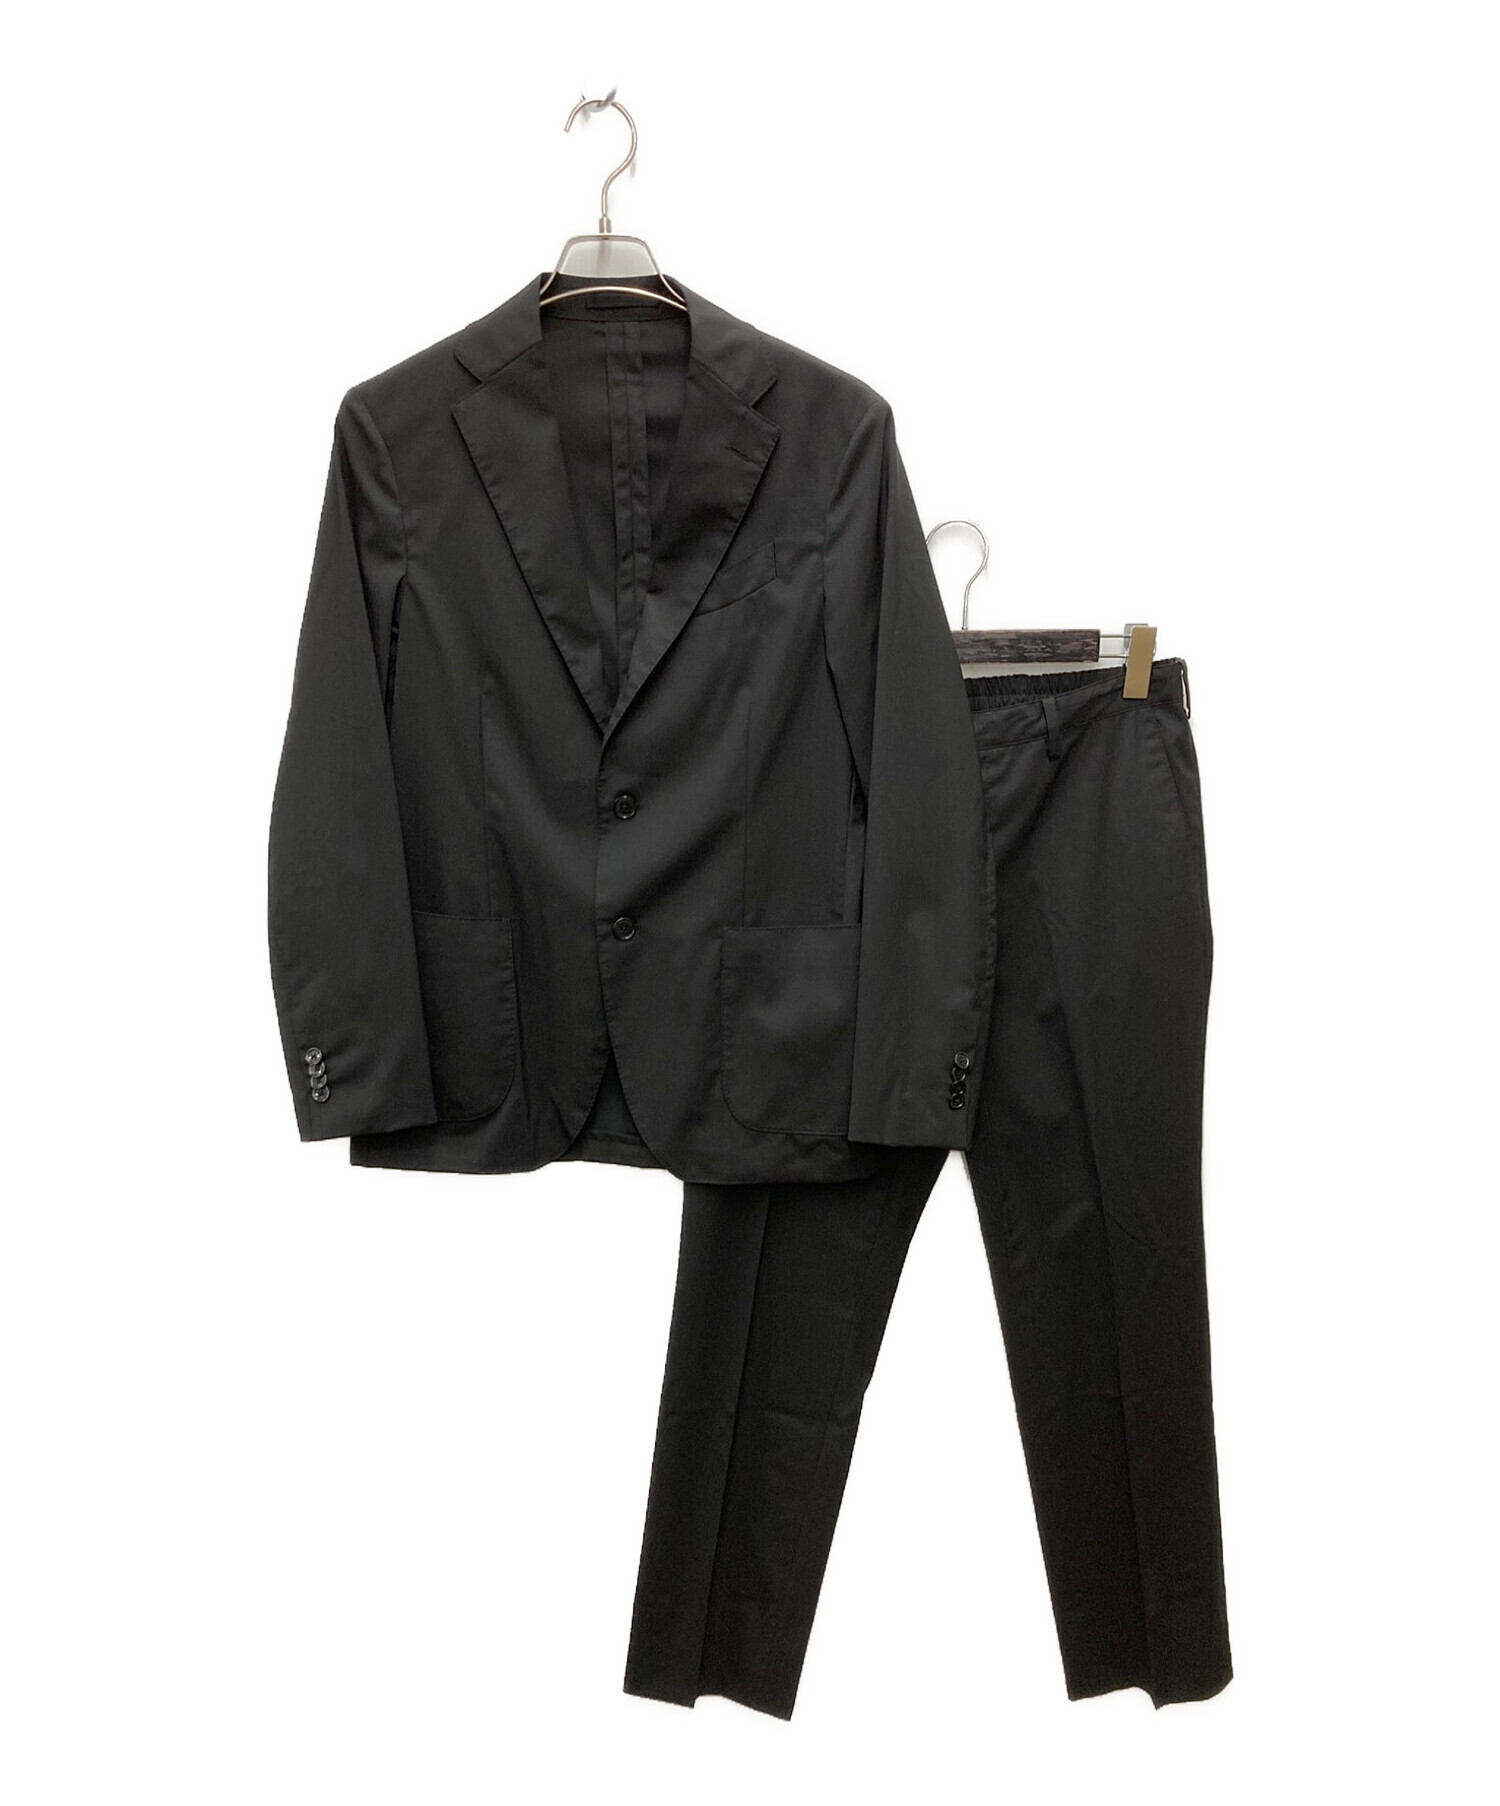 LARDINI (ラルディーニ) easy wearパッカブルスーツ ブラック サイズ:46